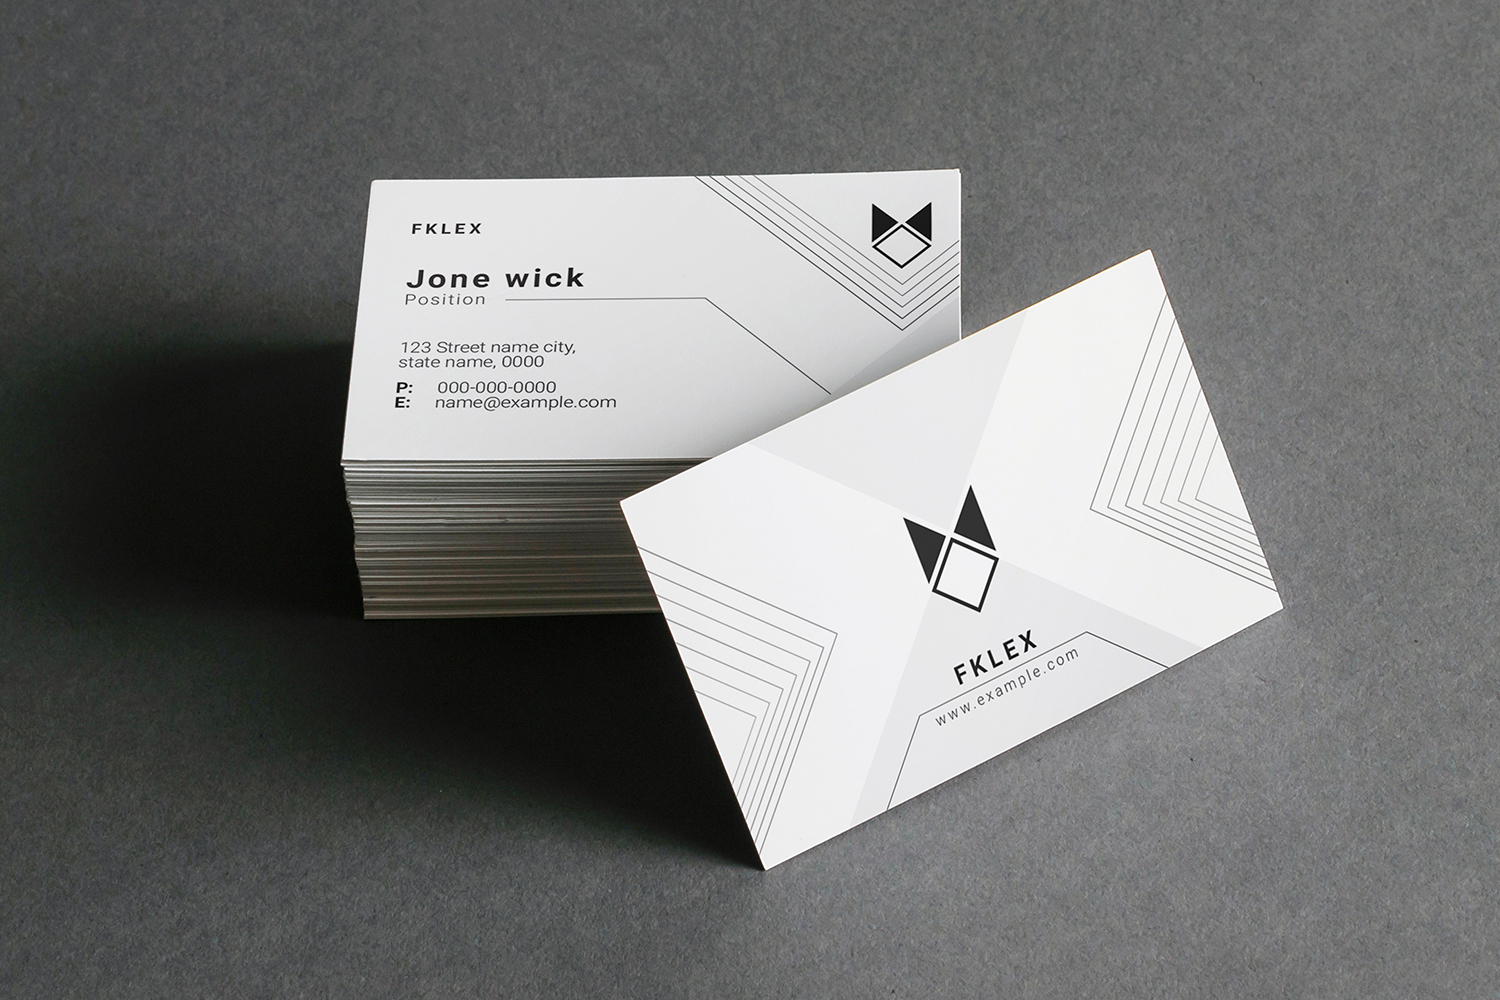 Fklex Business Card - Corporate Identity Template